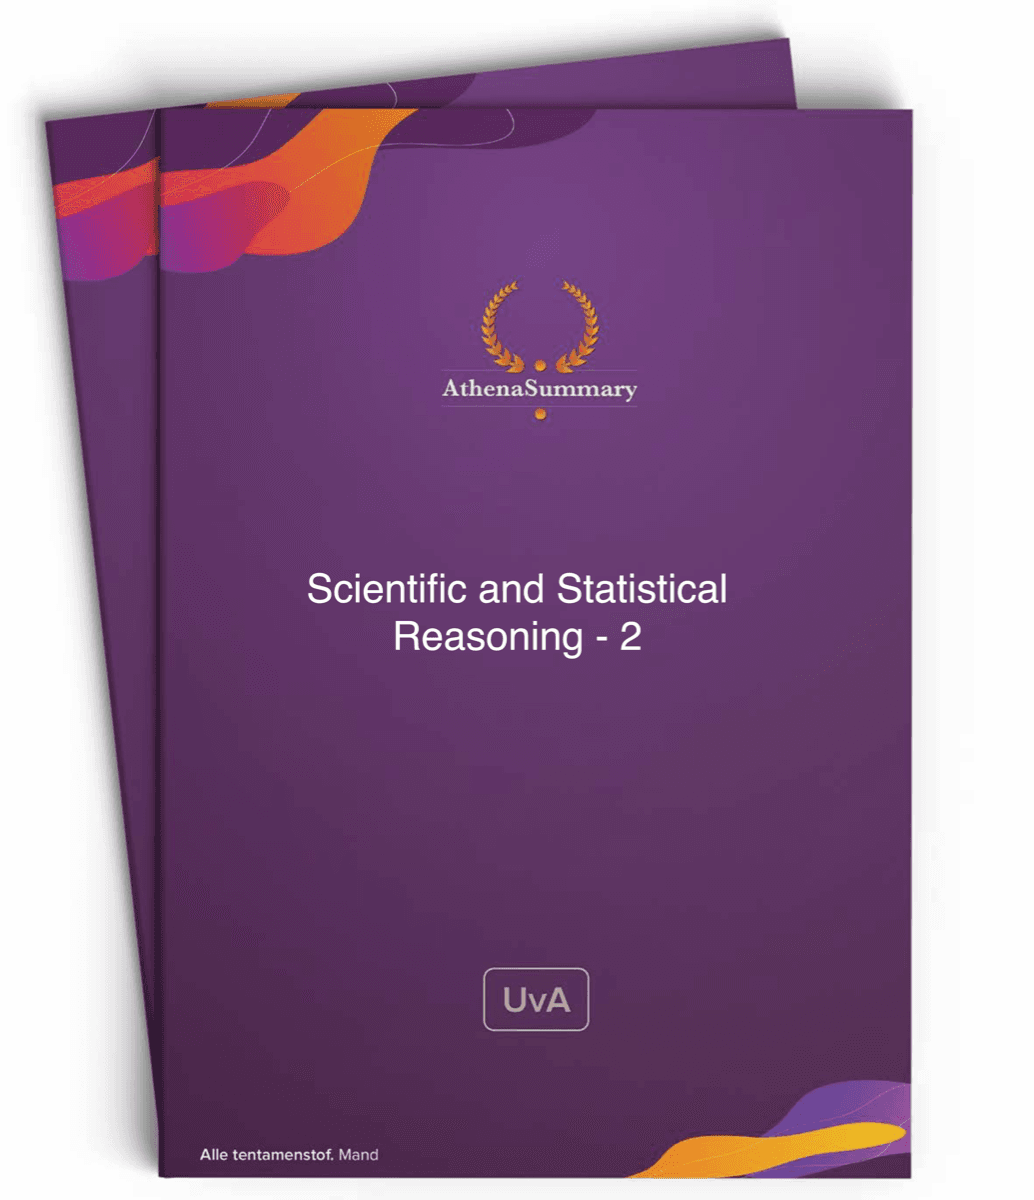 Literature Summary: Scientific and Statistical Reasoning - 2